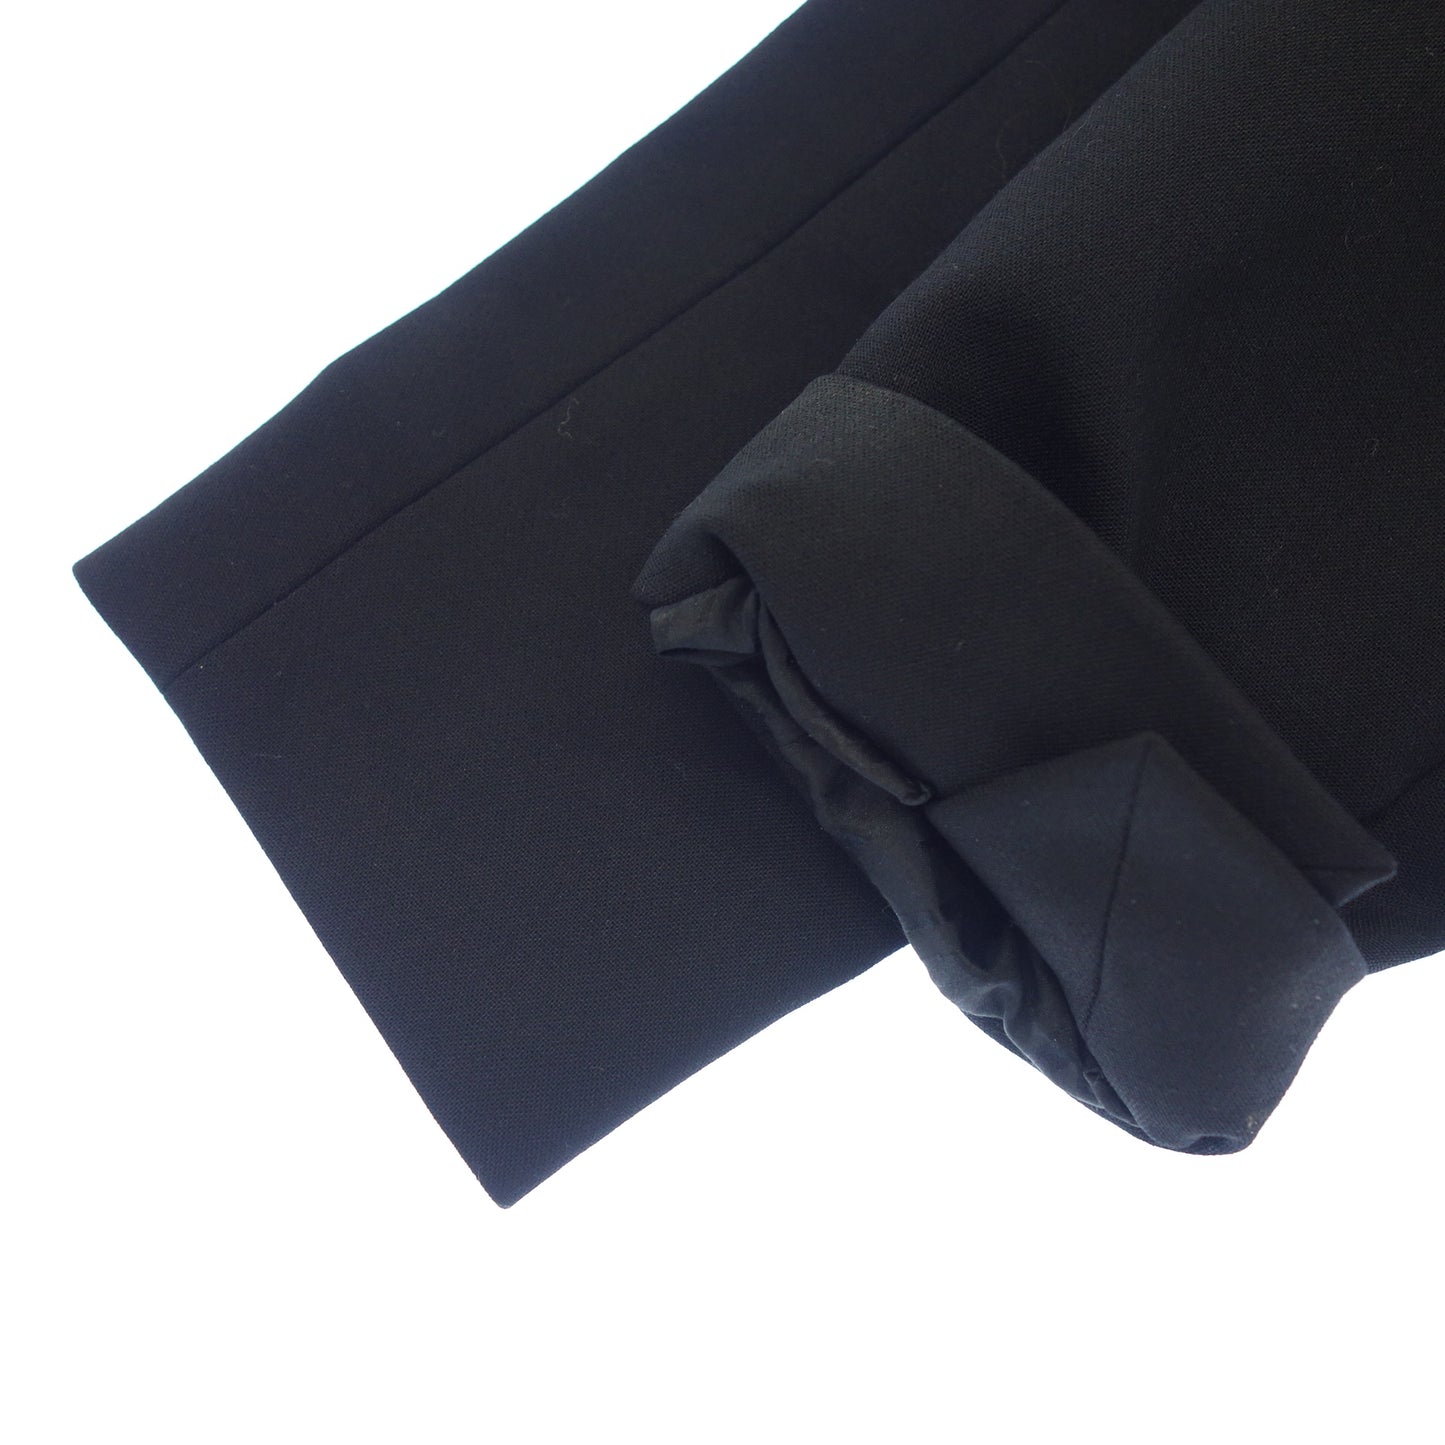 Good condition◆Louis Vuitton Setup Monogram Button Wool Women's Size 36 Black LOUIS VUITTON [AFE8] 